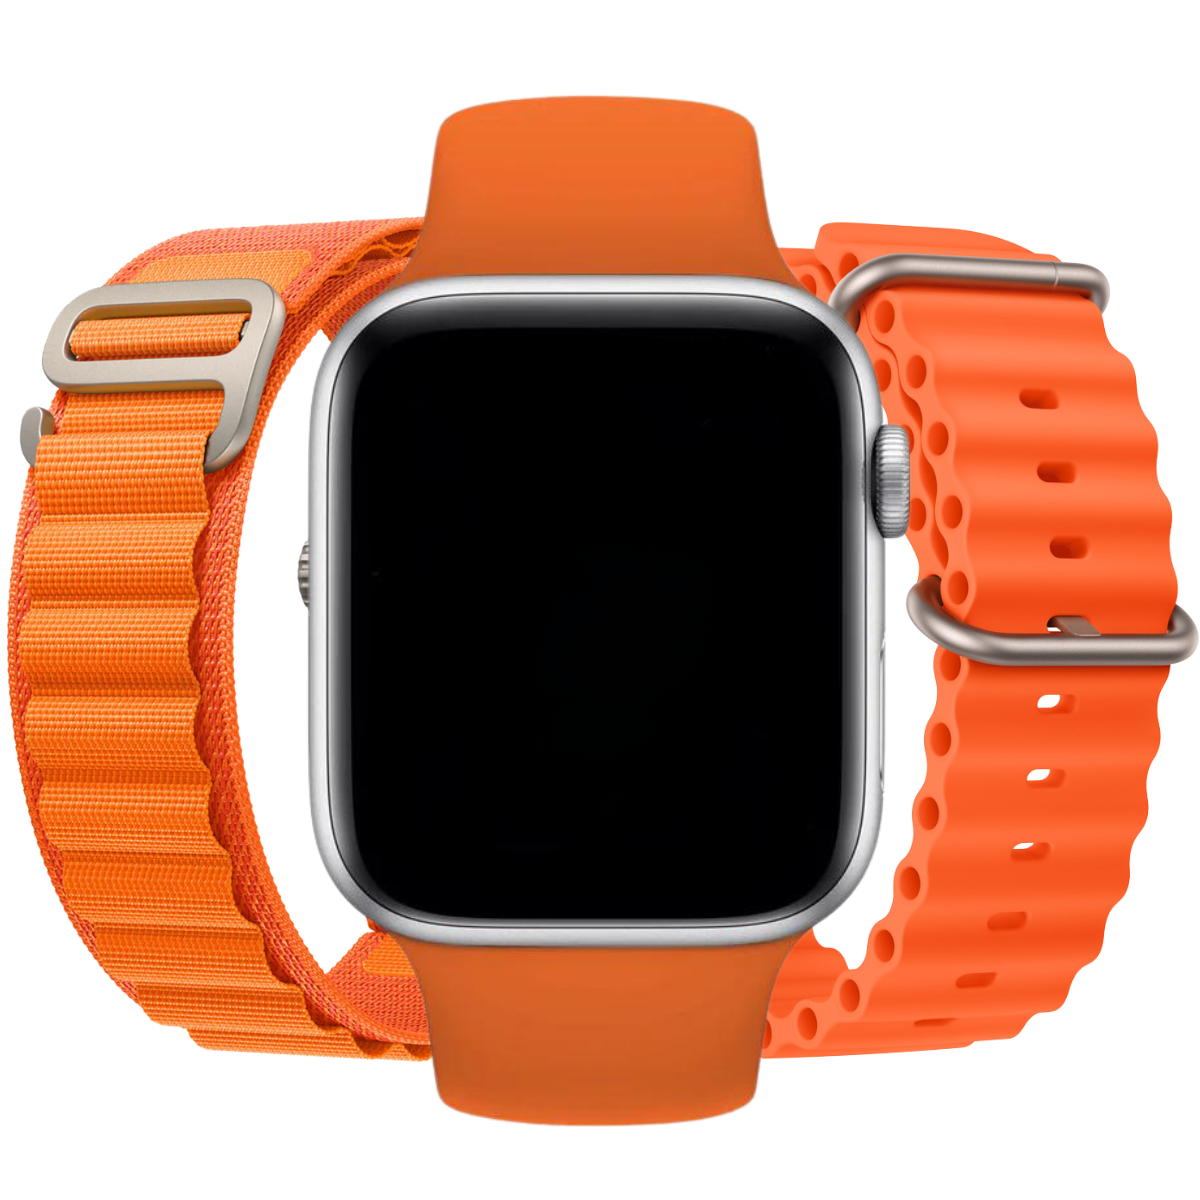 Orange Apple Watch bundle deal - 3x